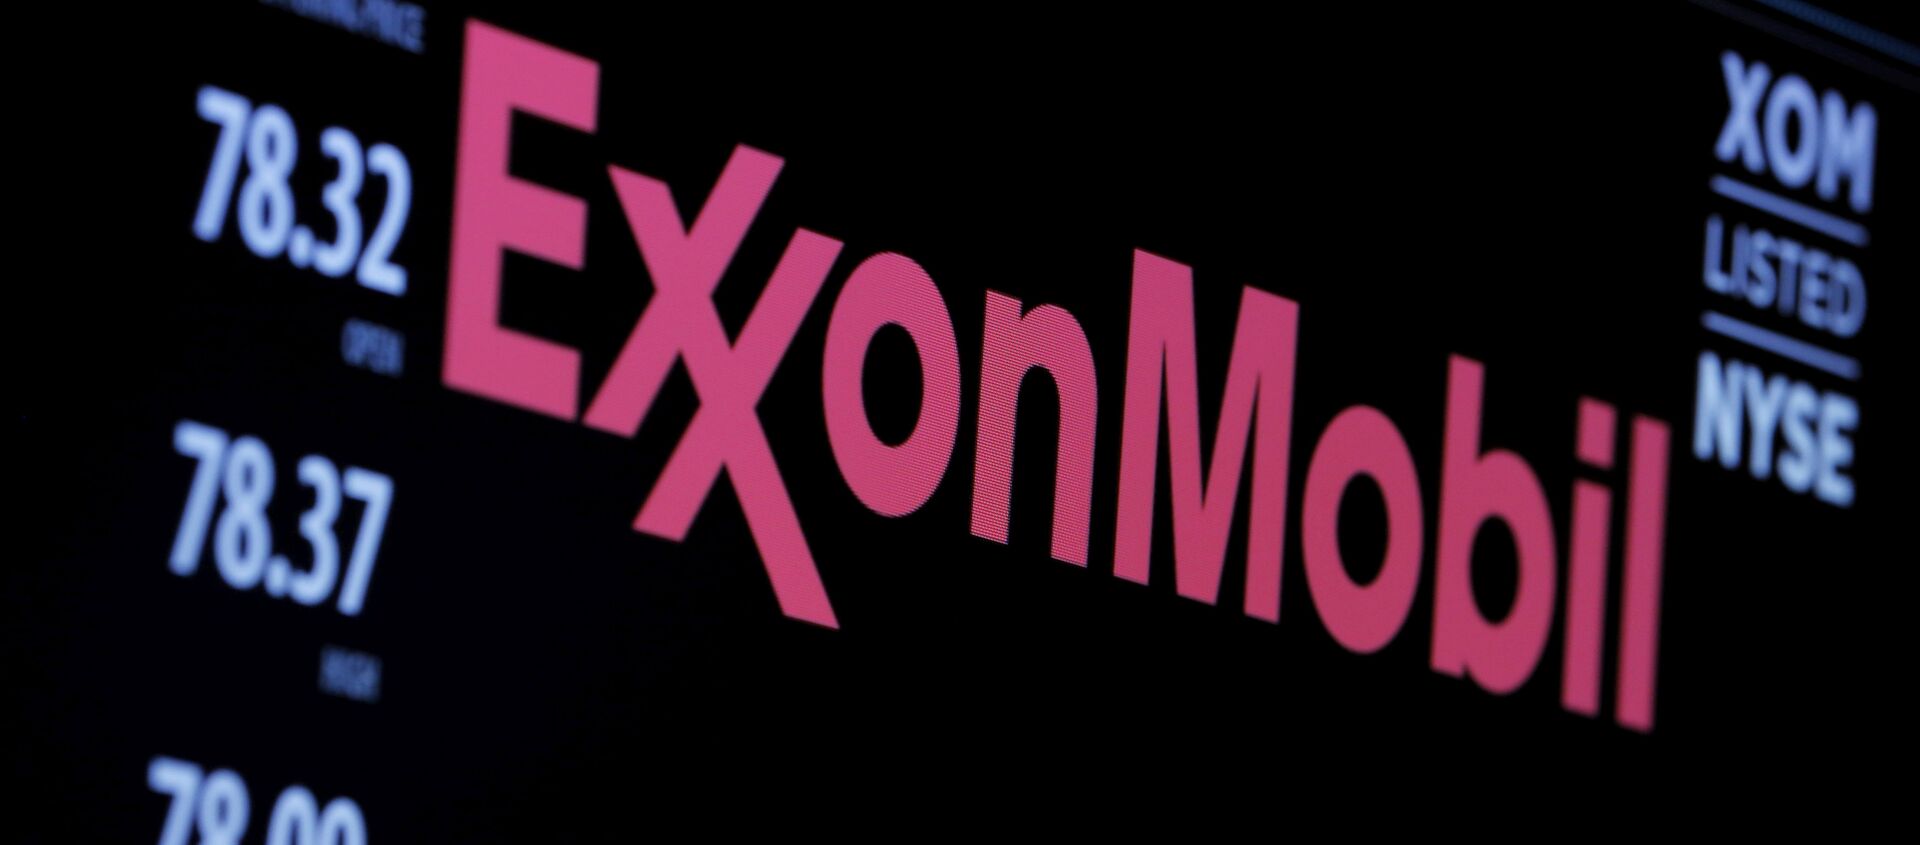 ExxonMobil - Sputnik Việt Nam, 1920, 20.07.2017